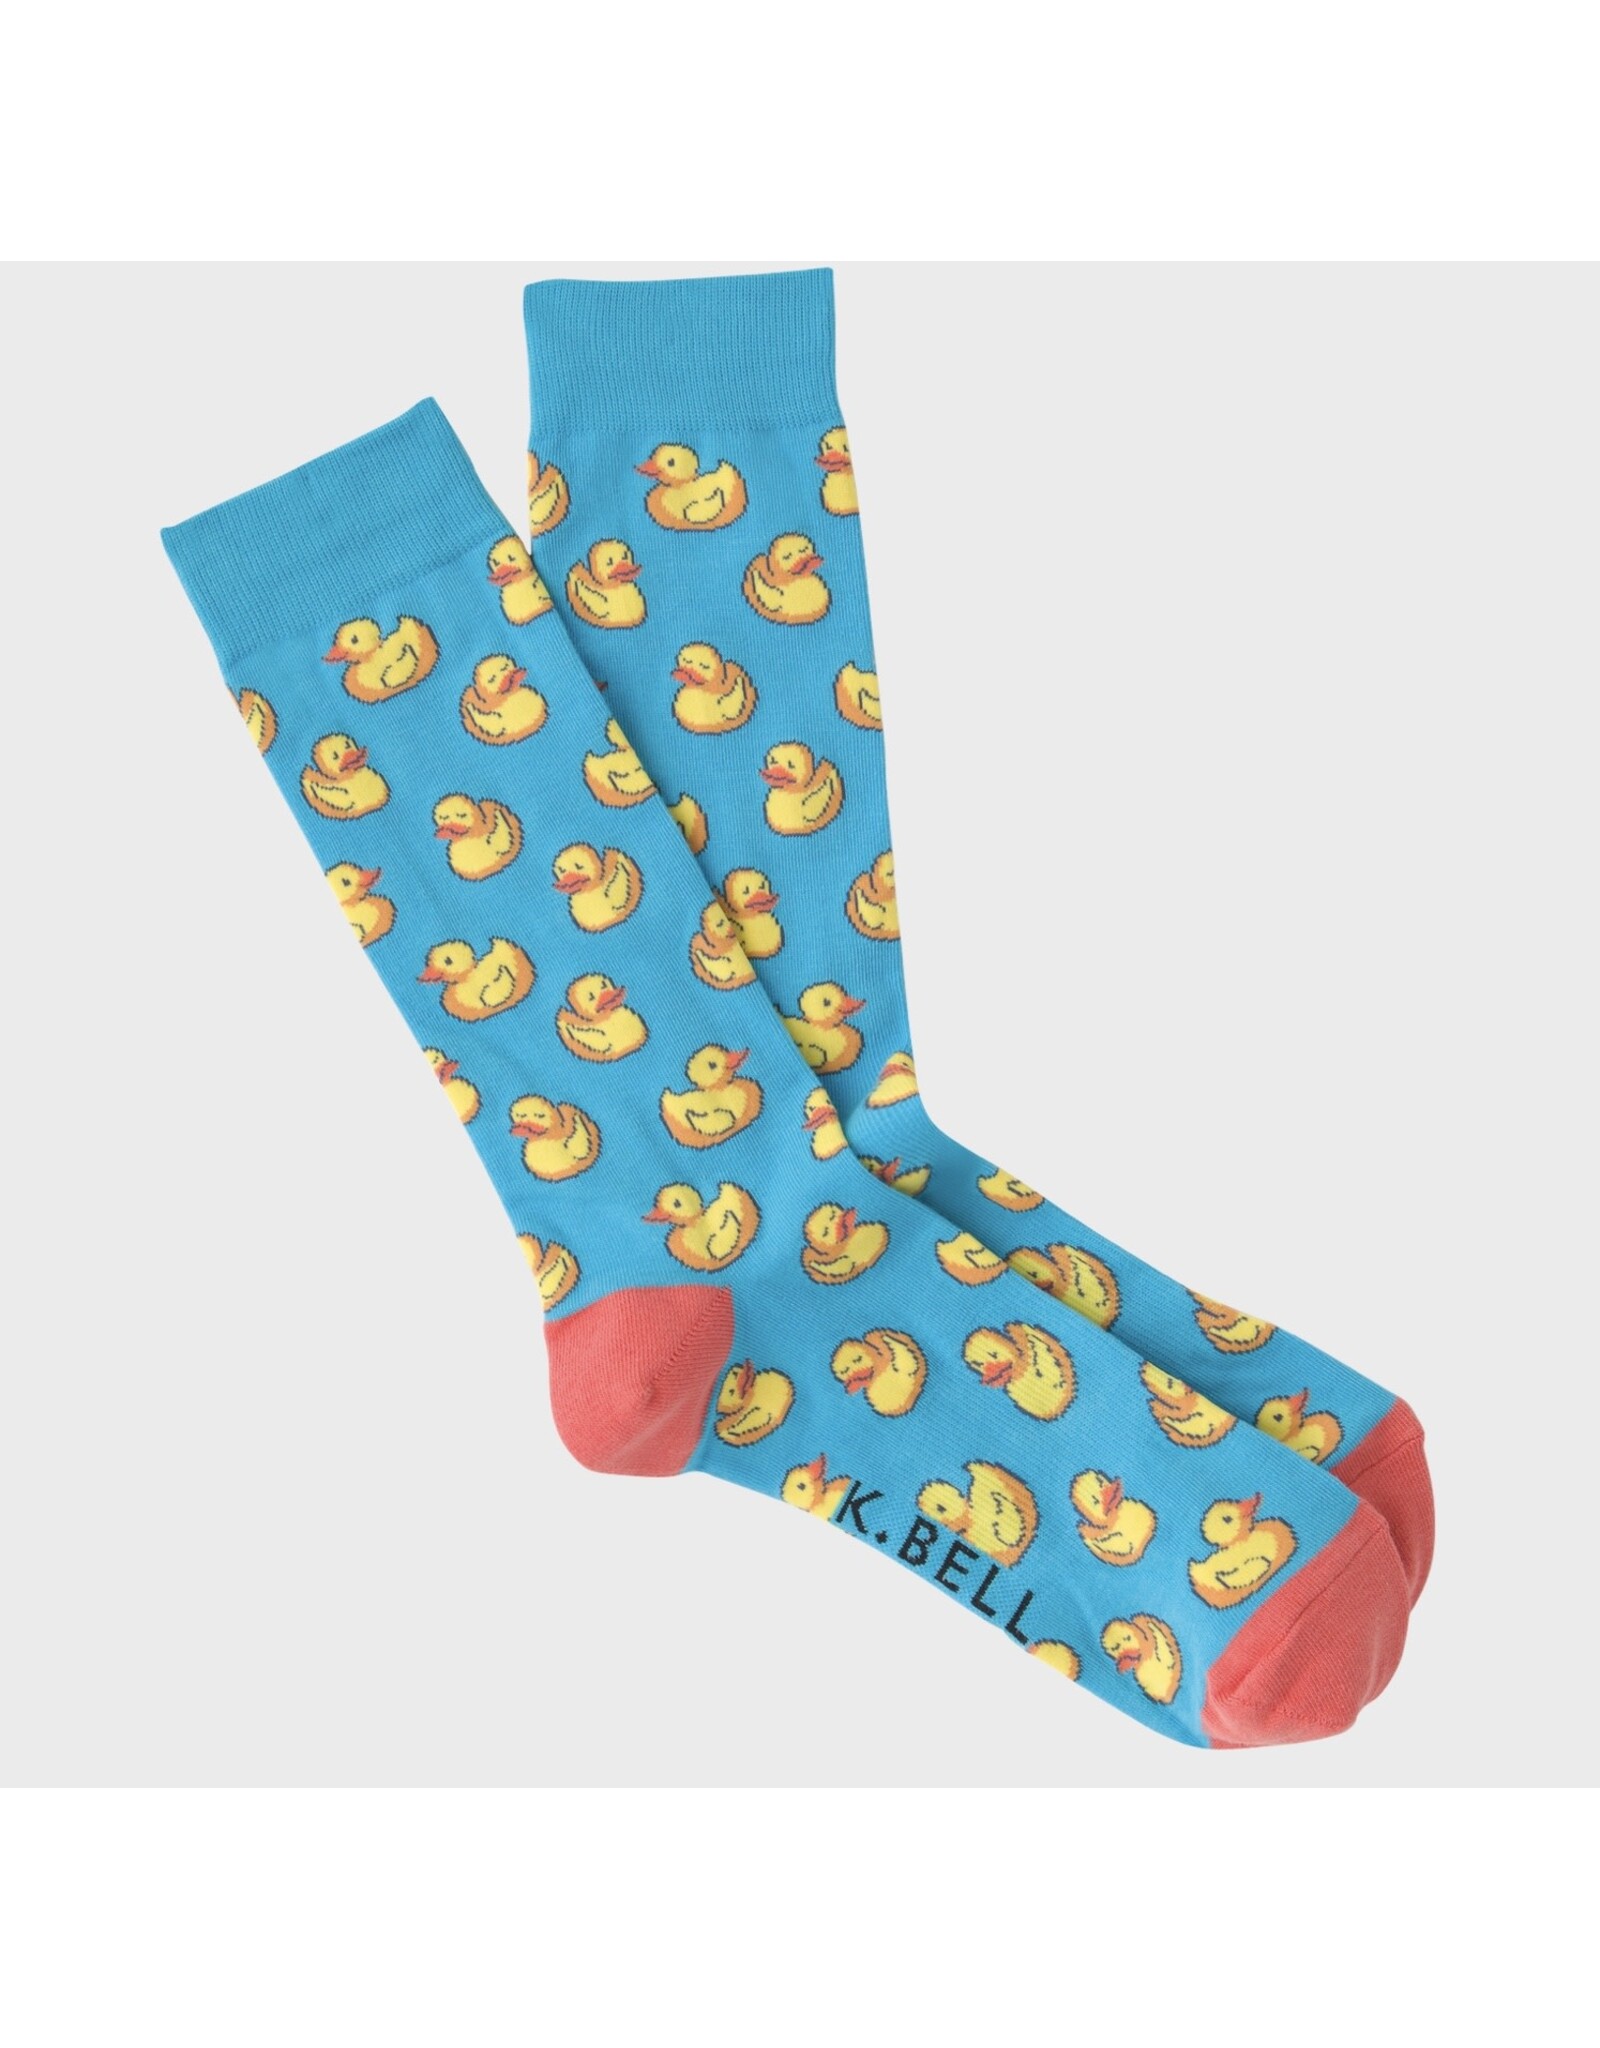 Socks, Turquoise with Peach Heel - Mens